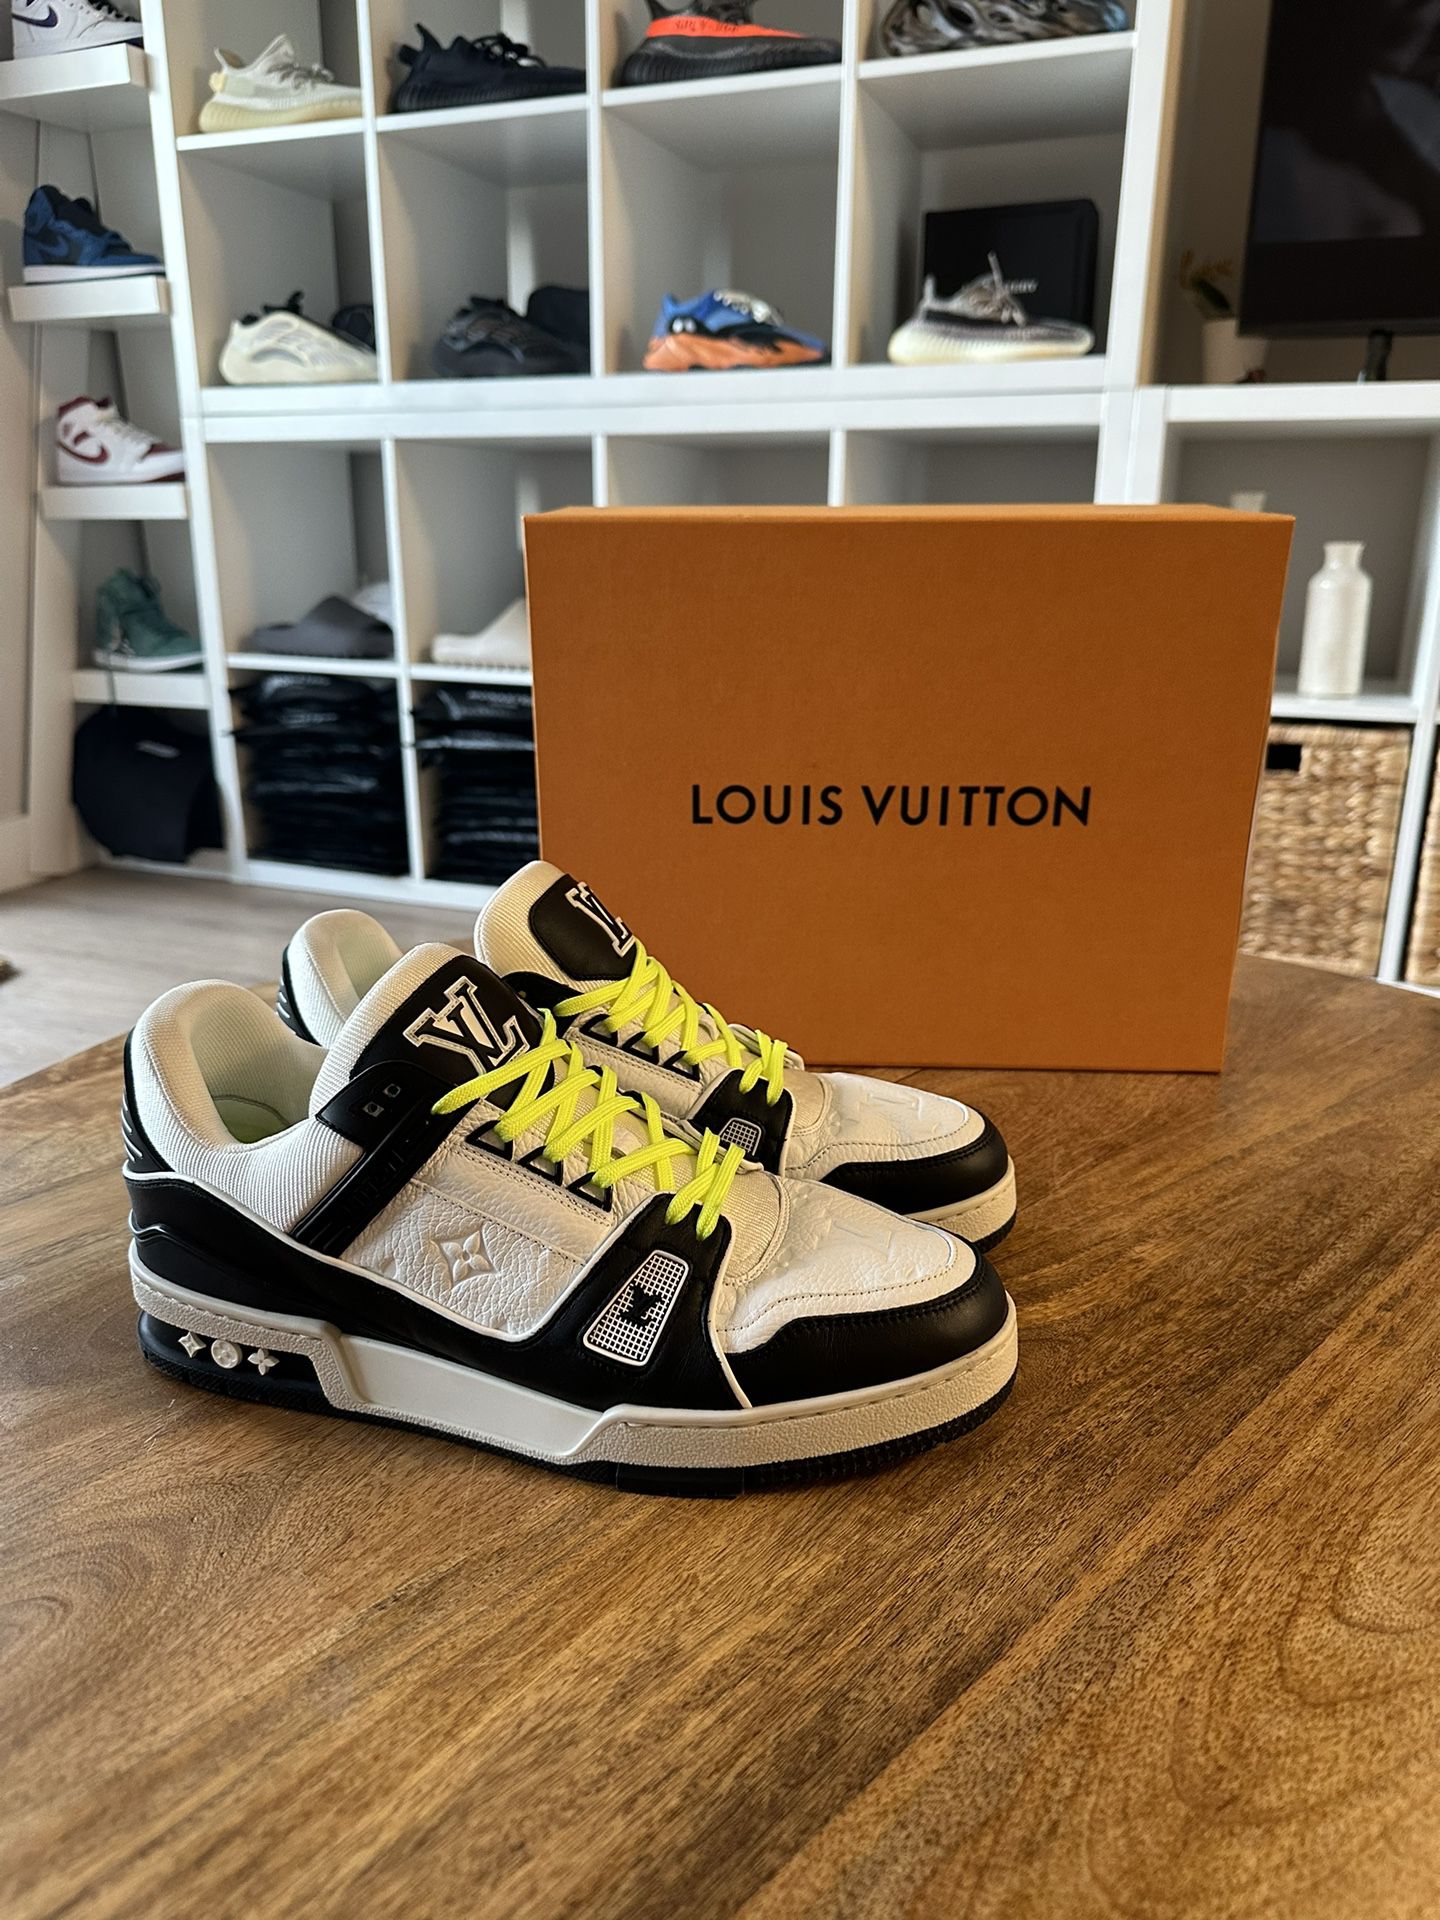 Louis Vuitton Lv Trainer Black Size 9 for Sale in Aventura, FL - OfferUp